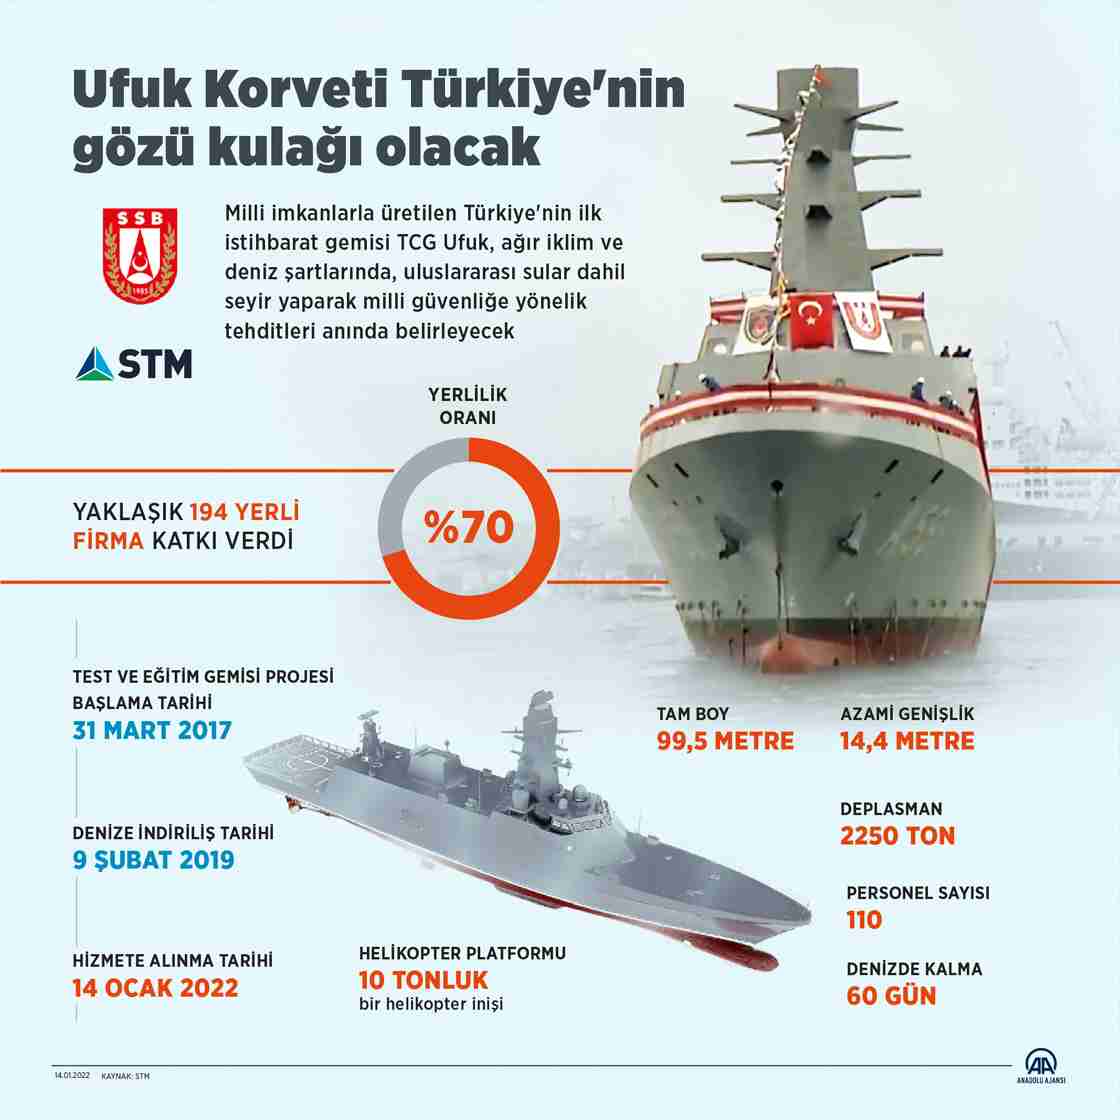 İstihbarat gemisi TCG Ufuk (A-591) hizmete girdi